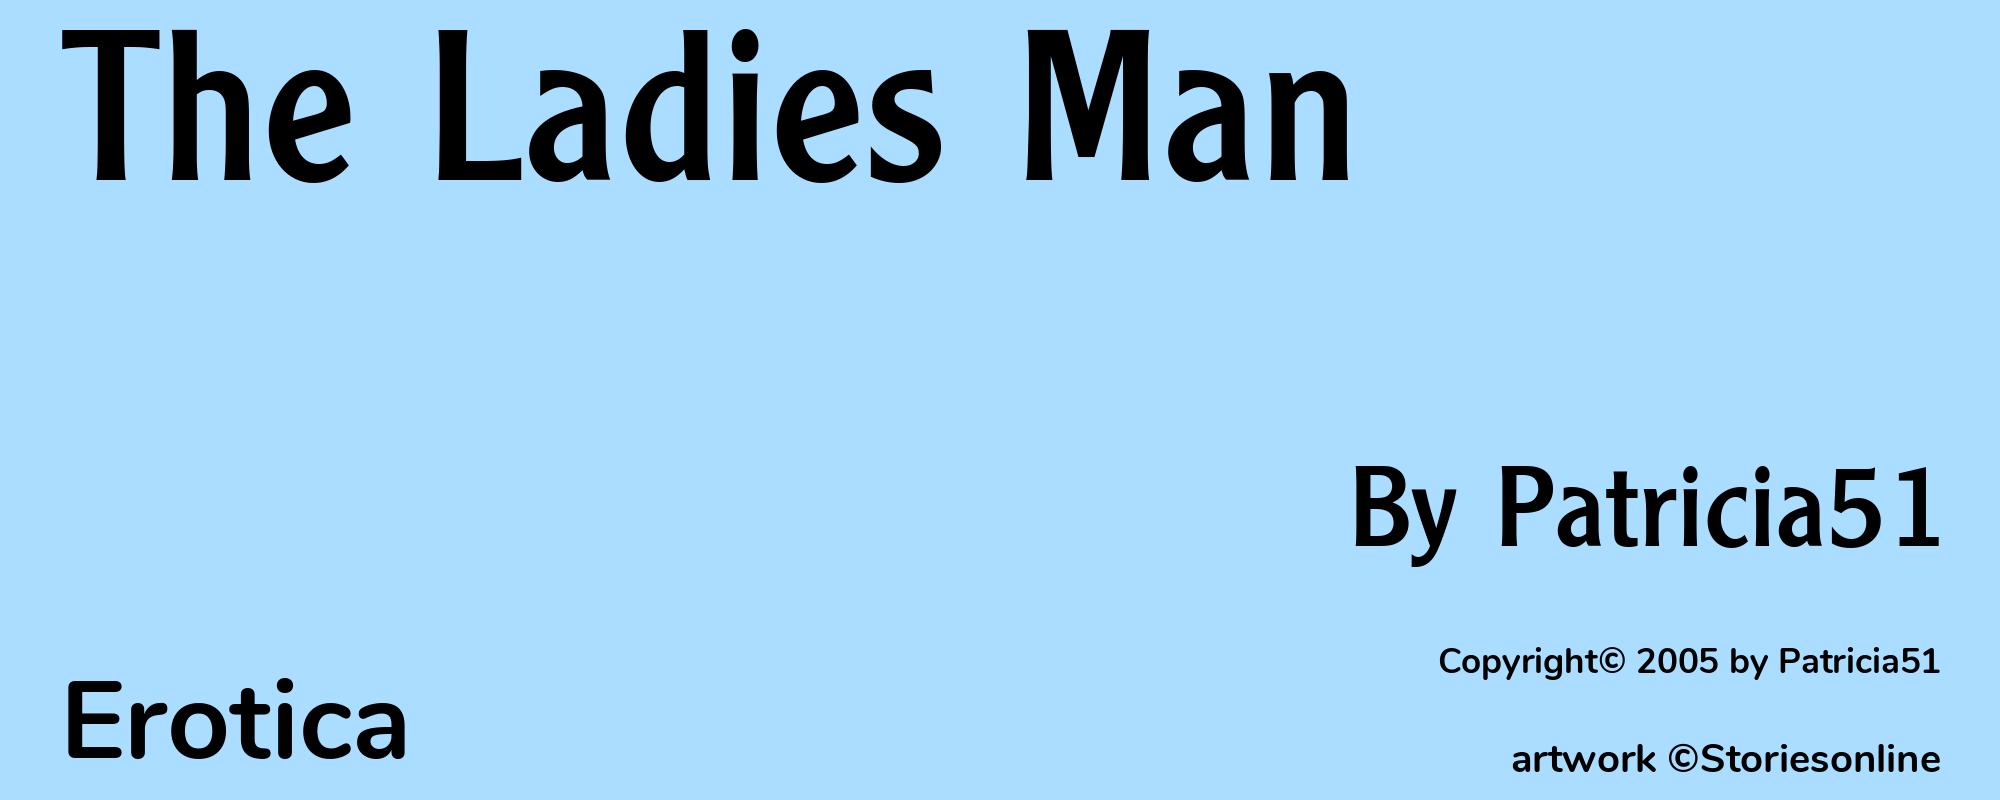 The Ladies Man - Cover